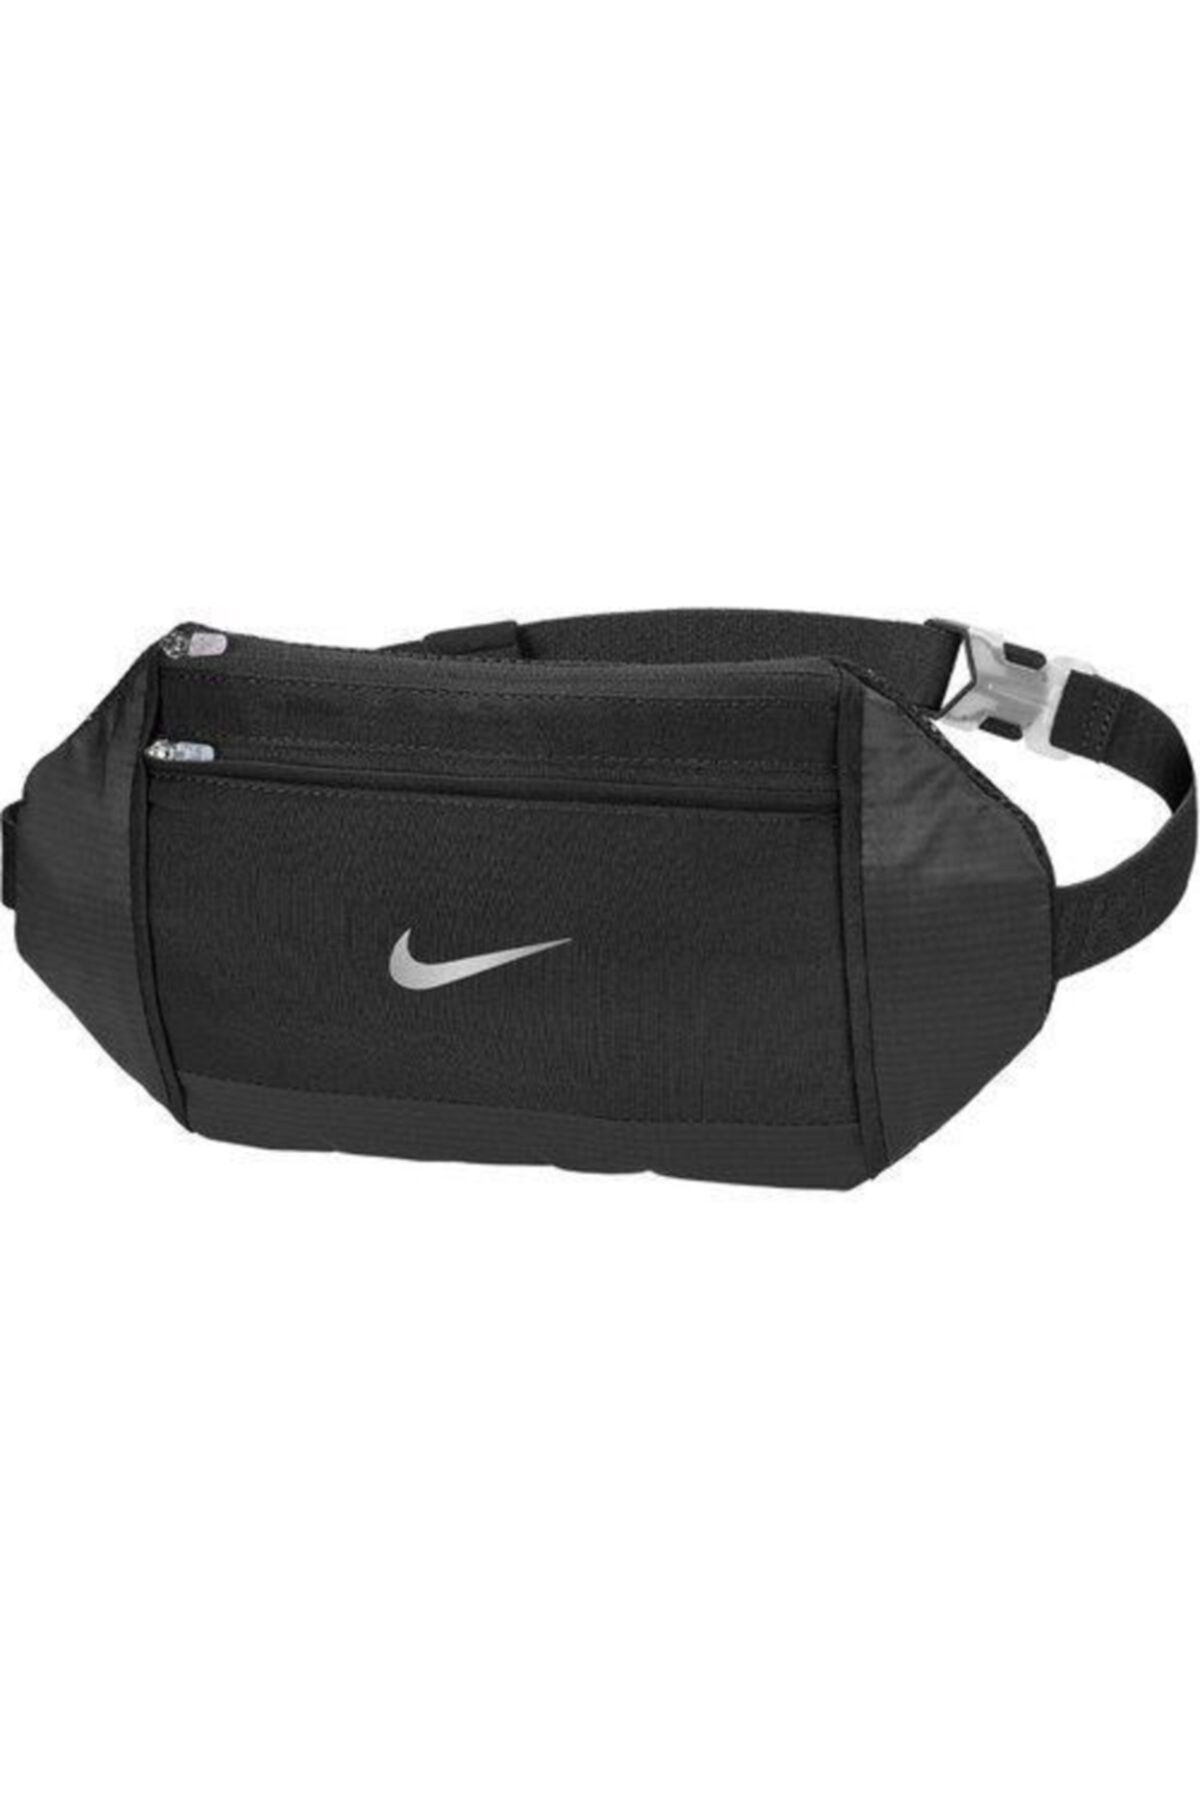 Nike Challenger Waistbag Large Günlük Bel Çantası N.100.1640.015.os